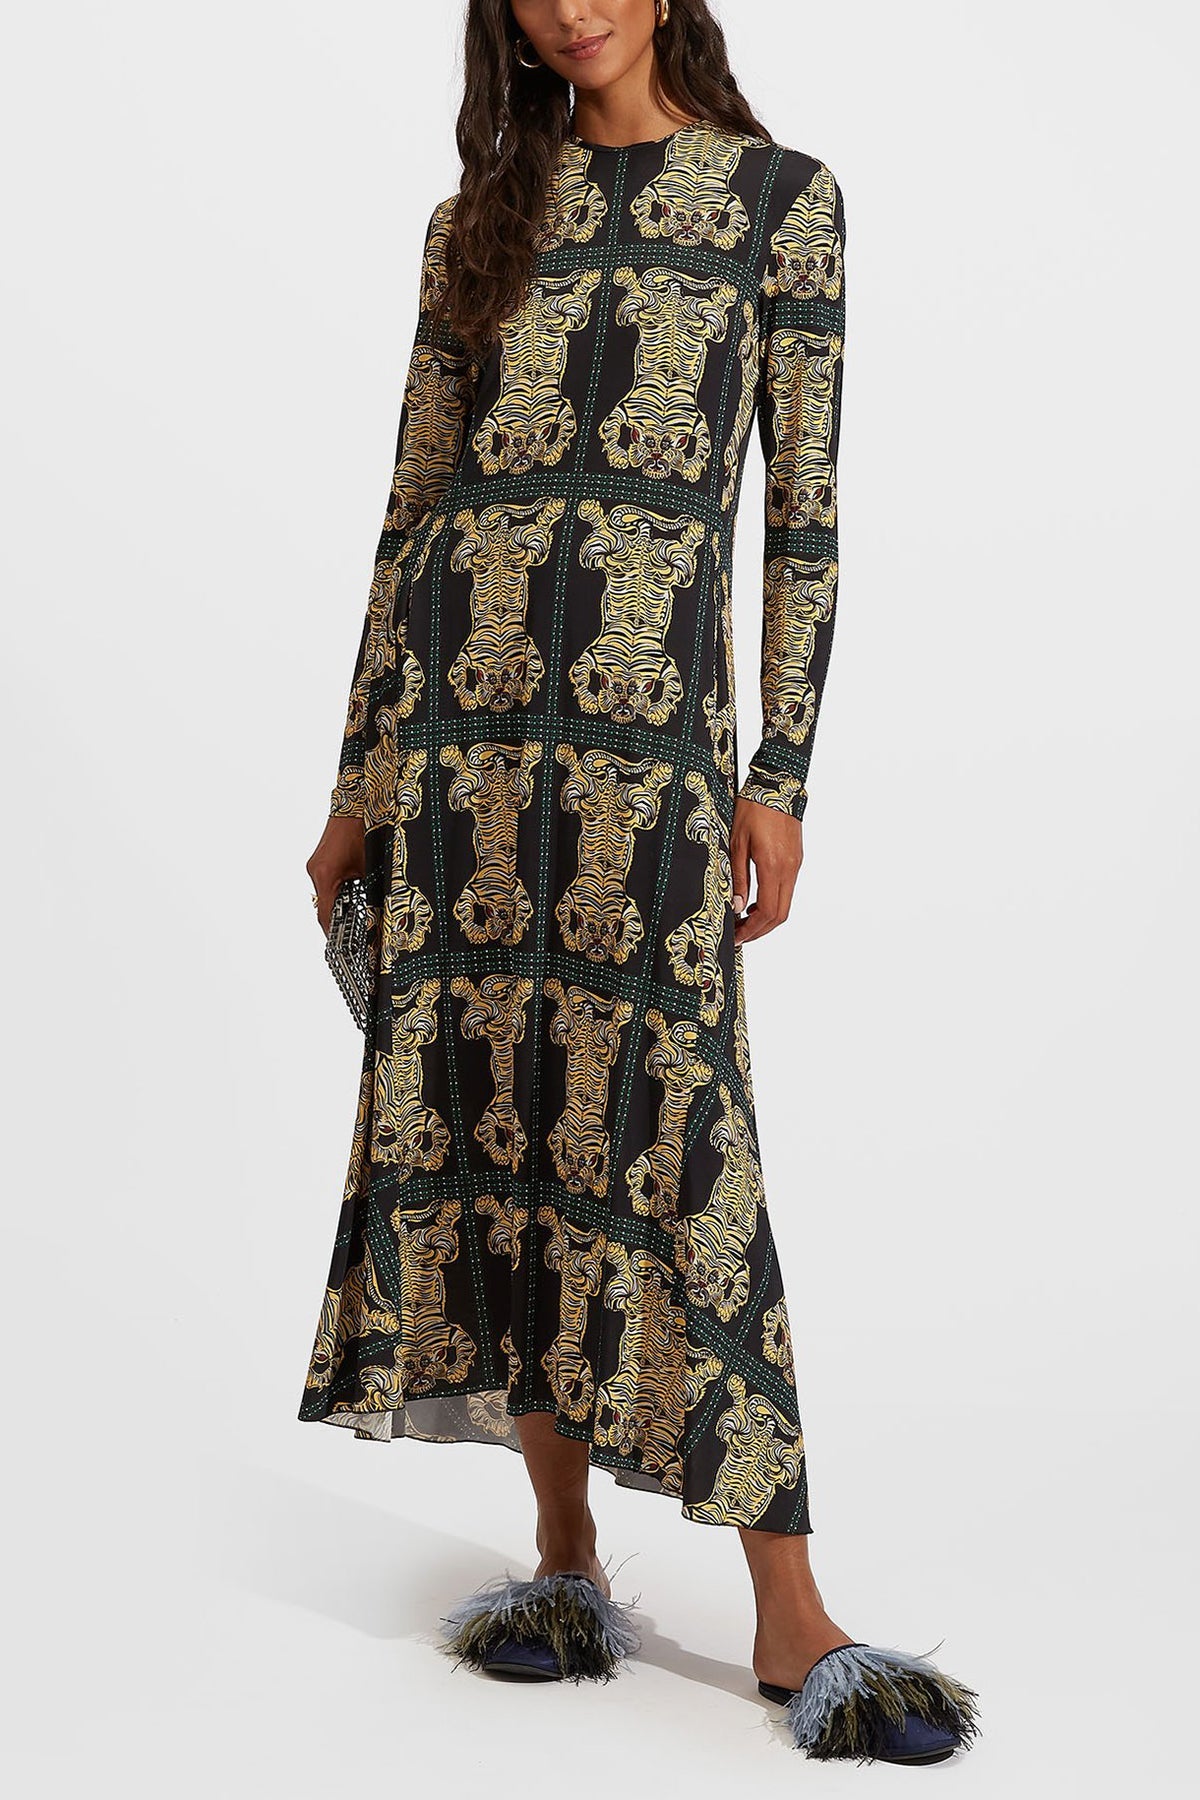 Drifter Dress in Tiger Tiles Black - shop-olivia.com